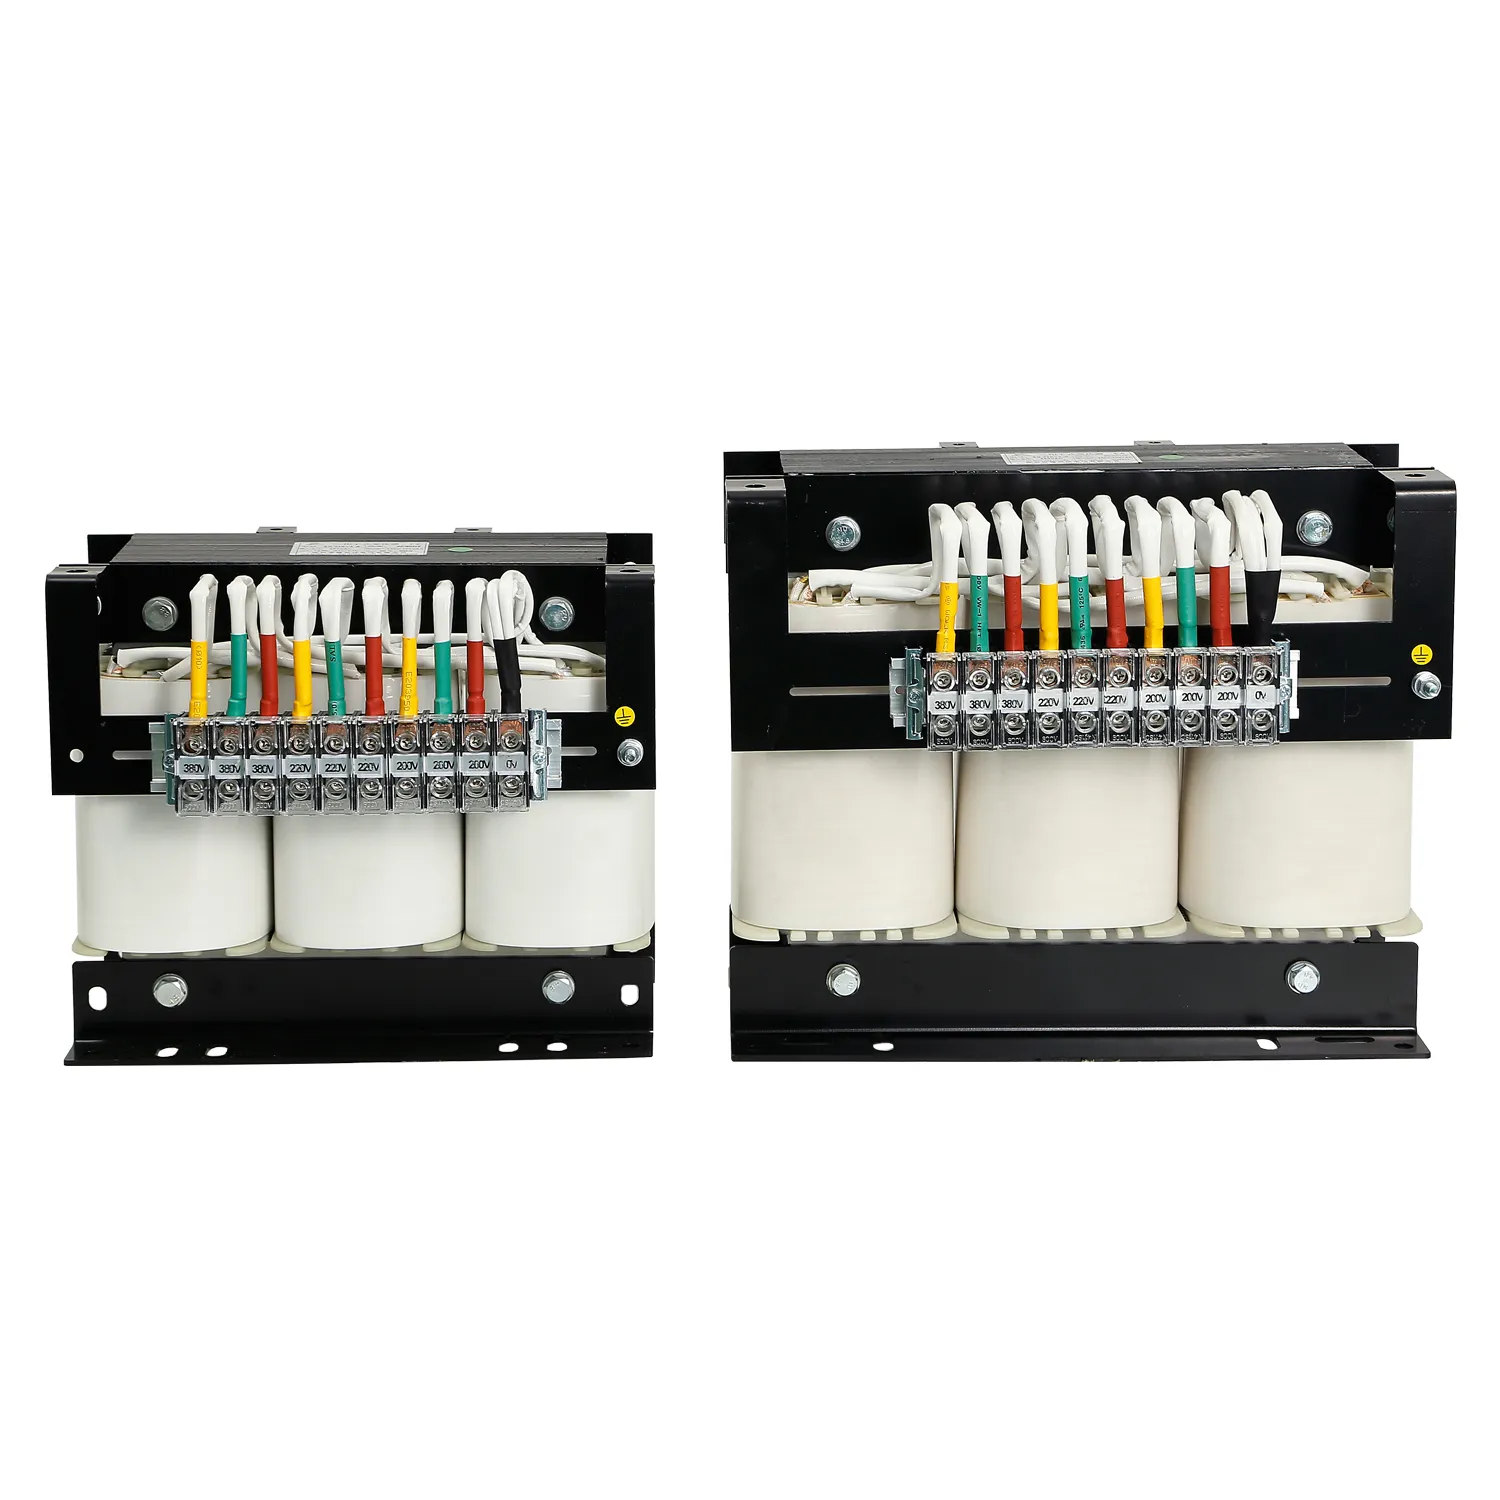 220 3 Phase 60HZ Electrical Transformer #5035DK Details about   10 KVA 460 